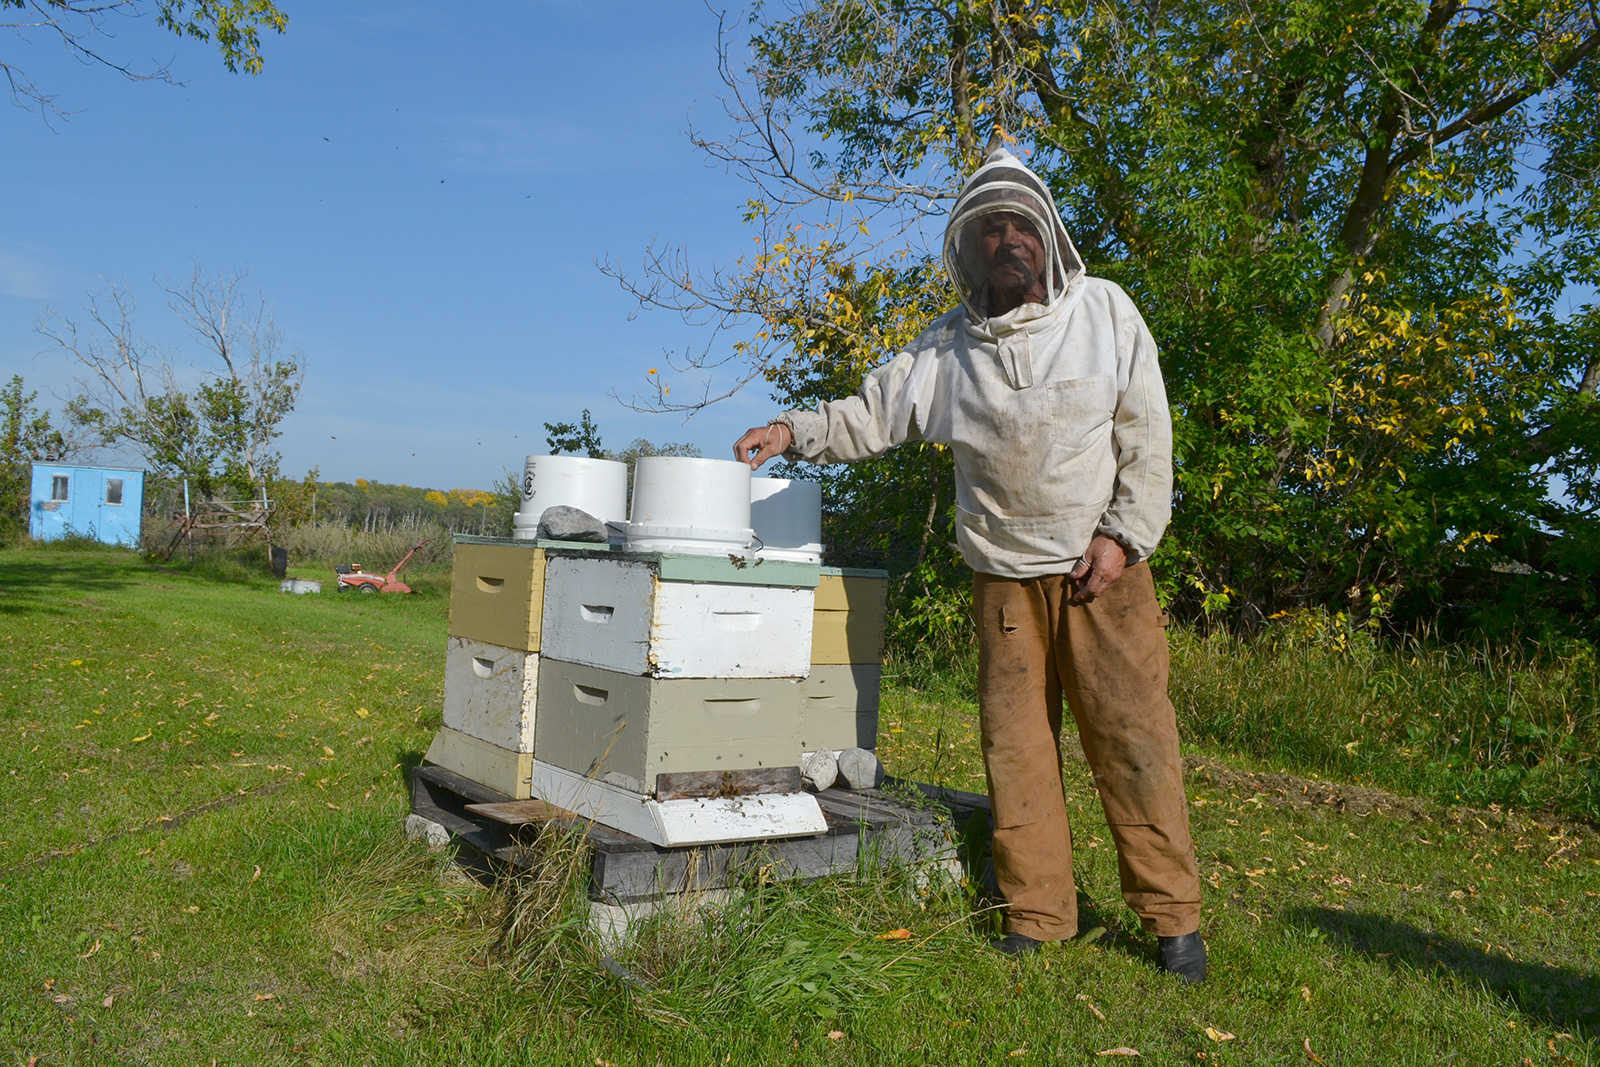 Bee Keeper – Dave Olson of Peonan Point